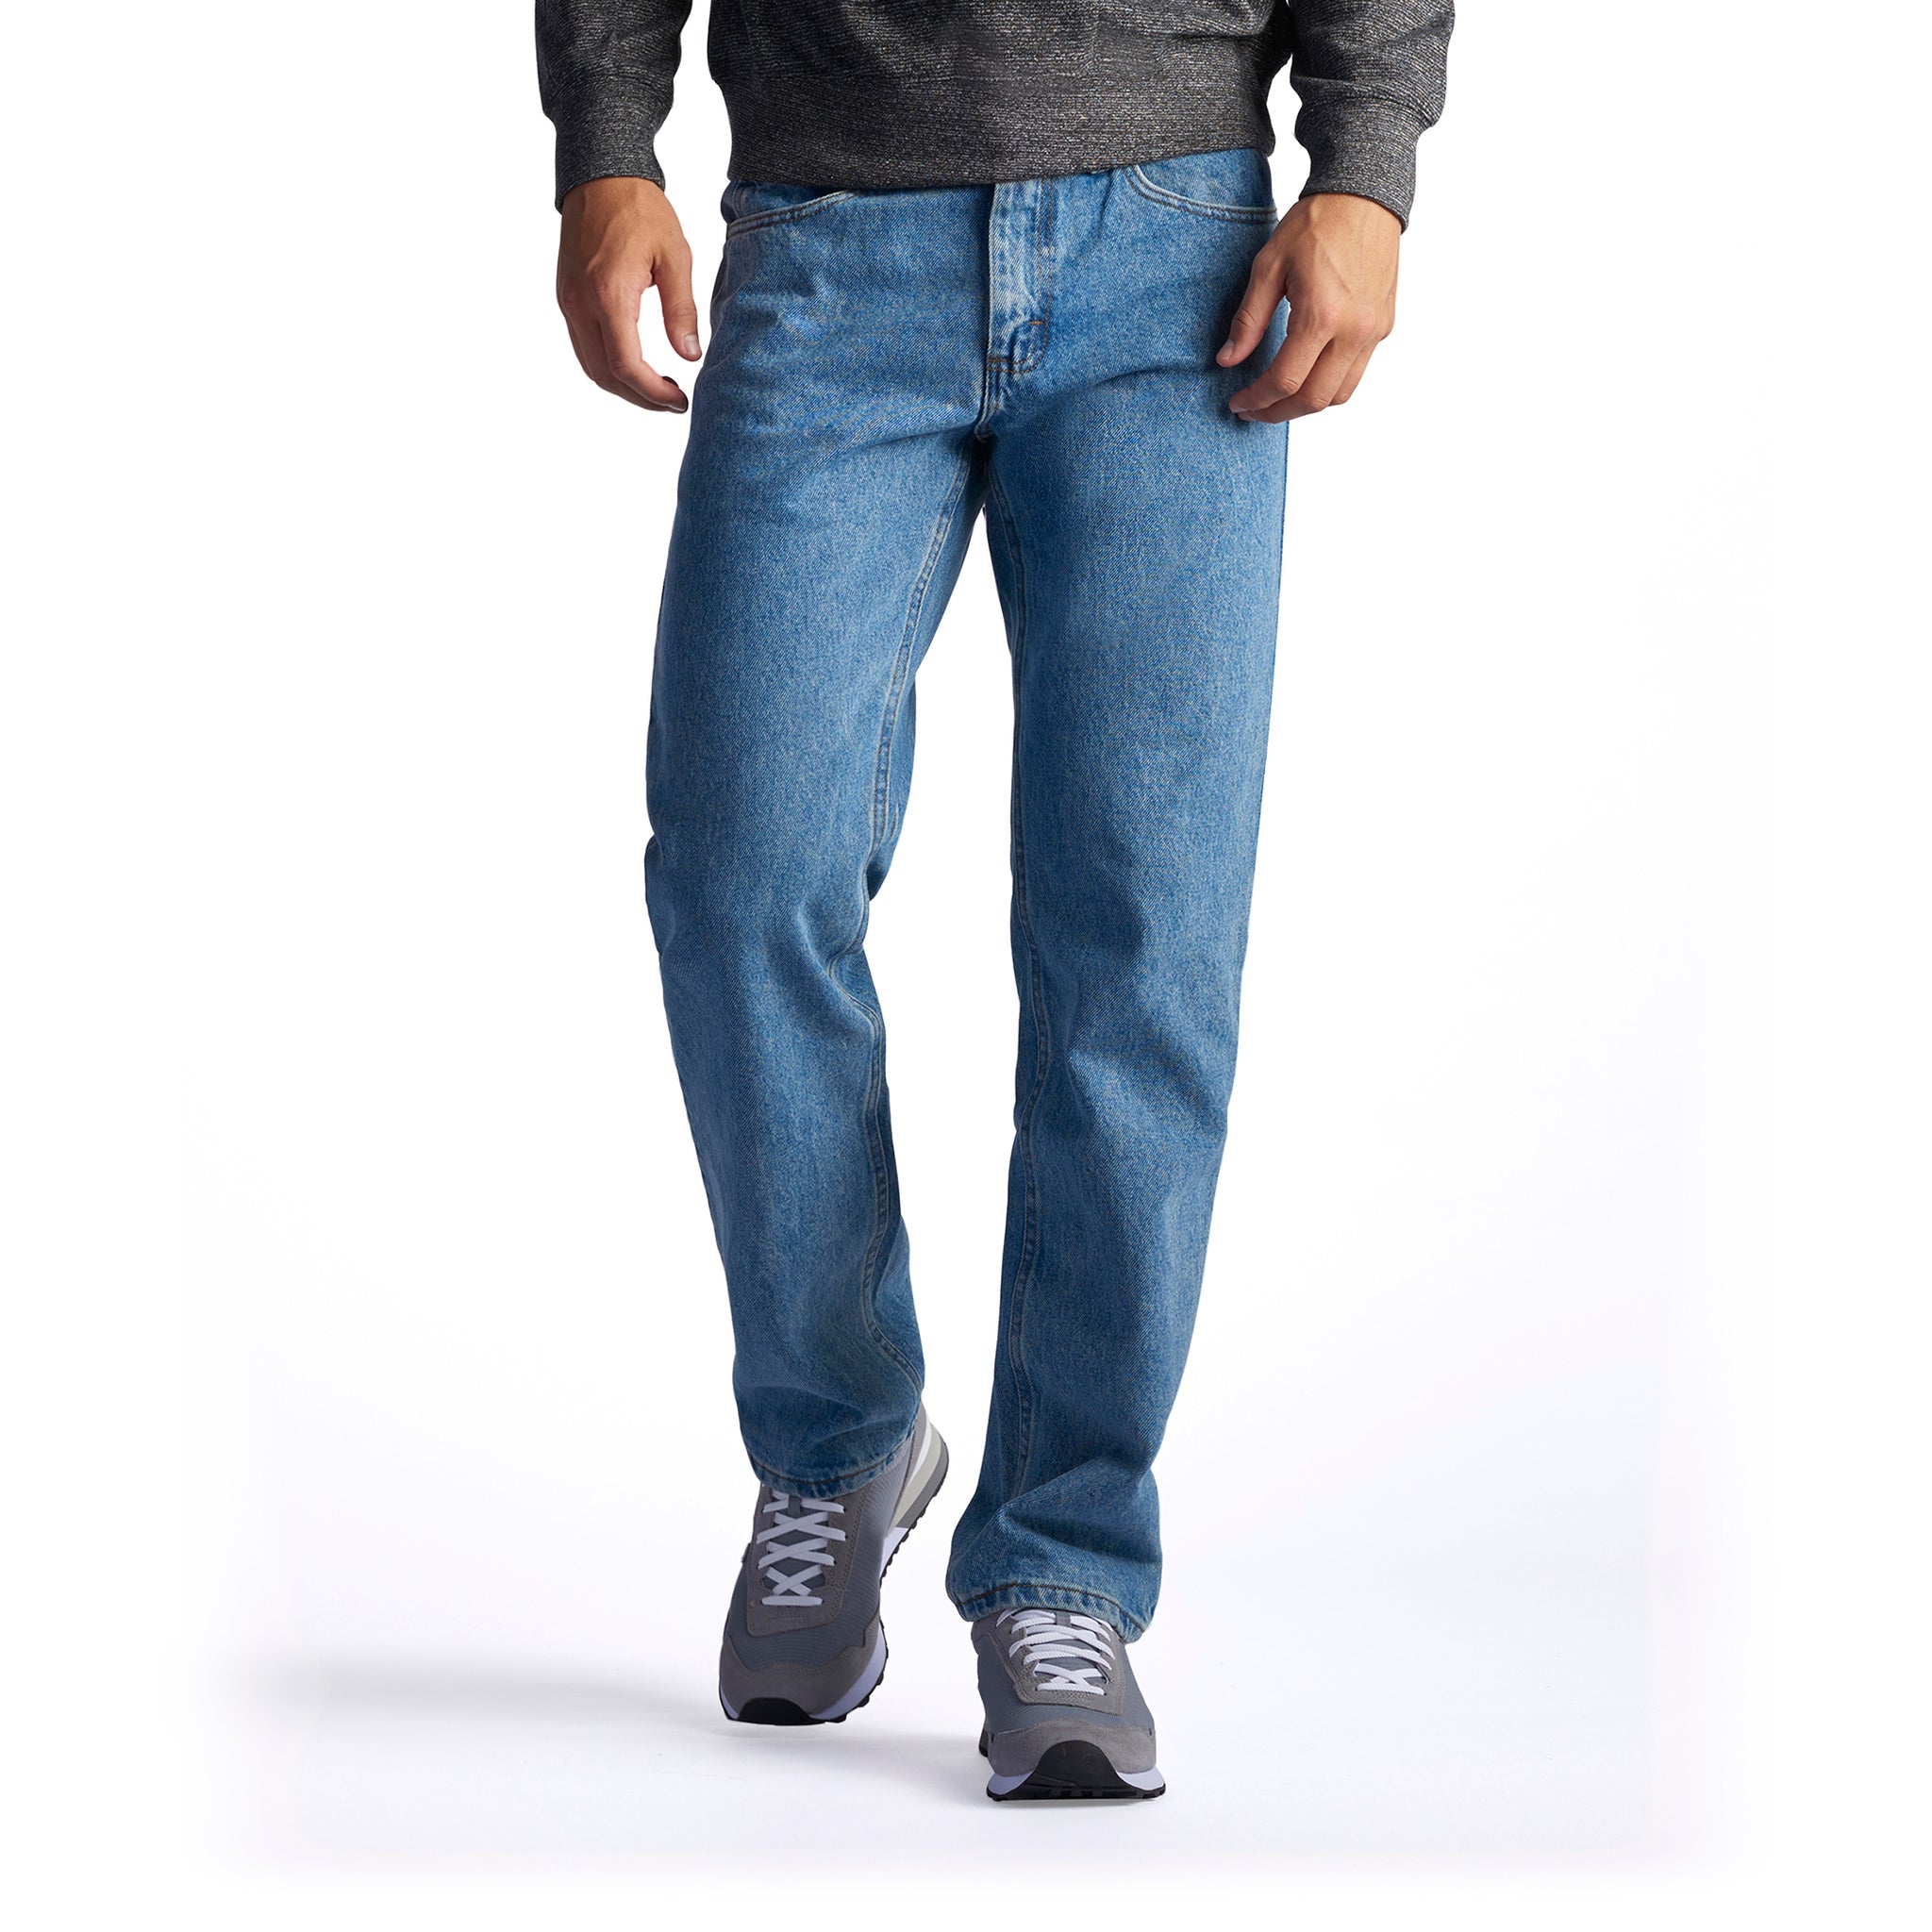 Comfort Fit Plain G-star Heavy Denim Jeans, Black at Rs 460/piece